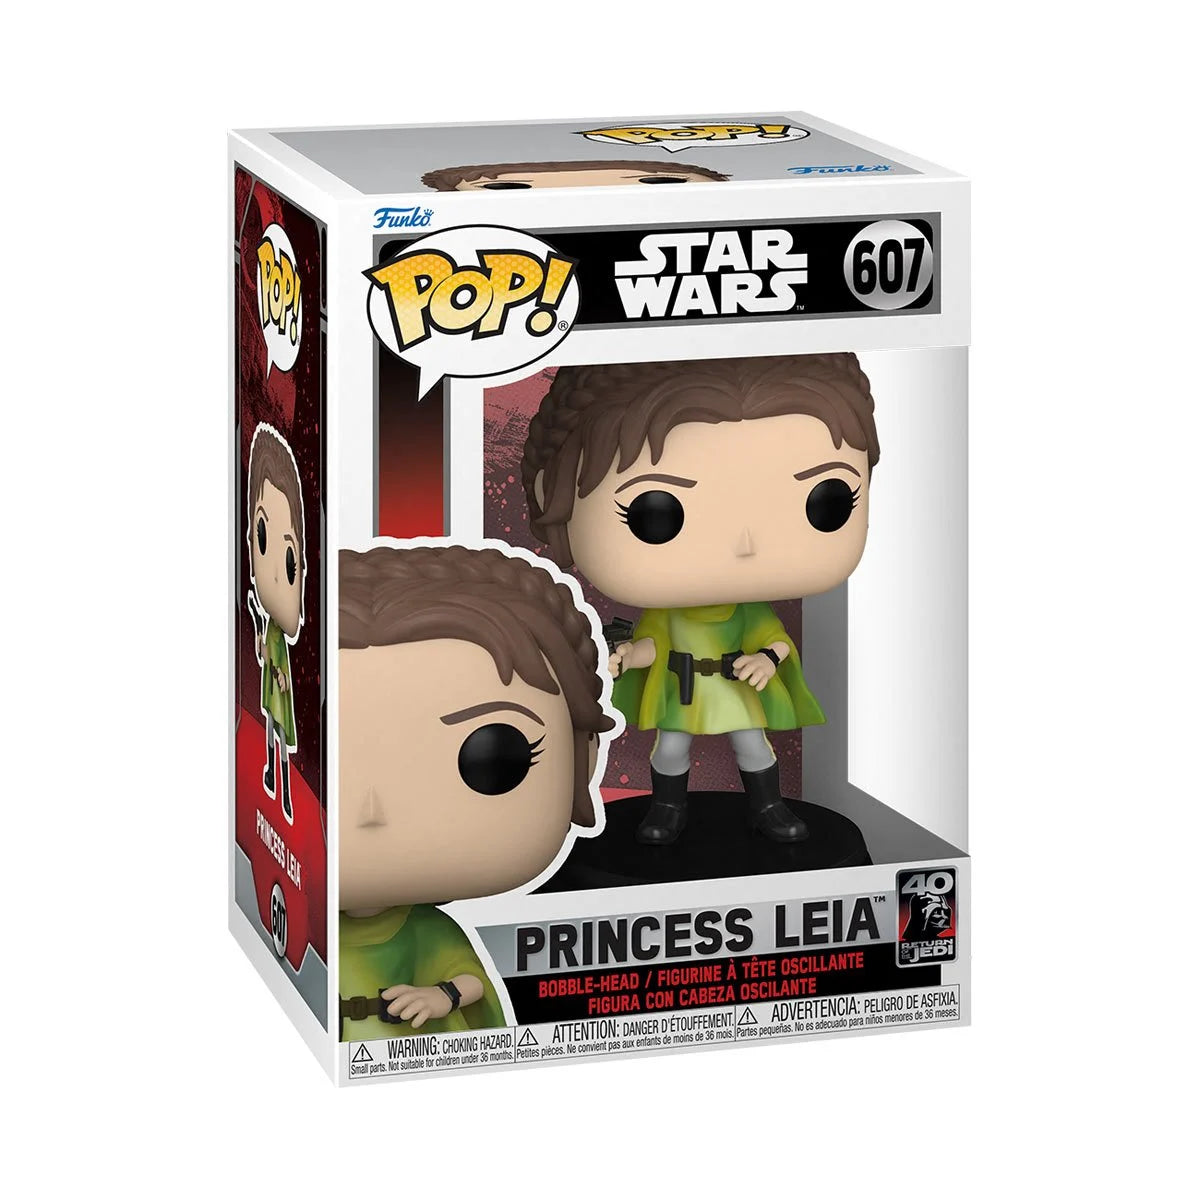 Princess Leia (Endor) Return of the Jedi 40th Anniversary Pop! Vinyl Figure